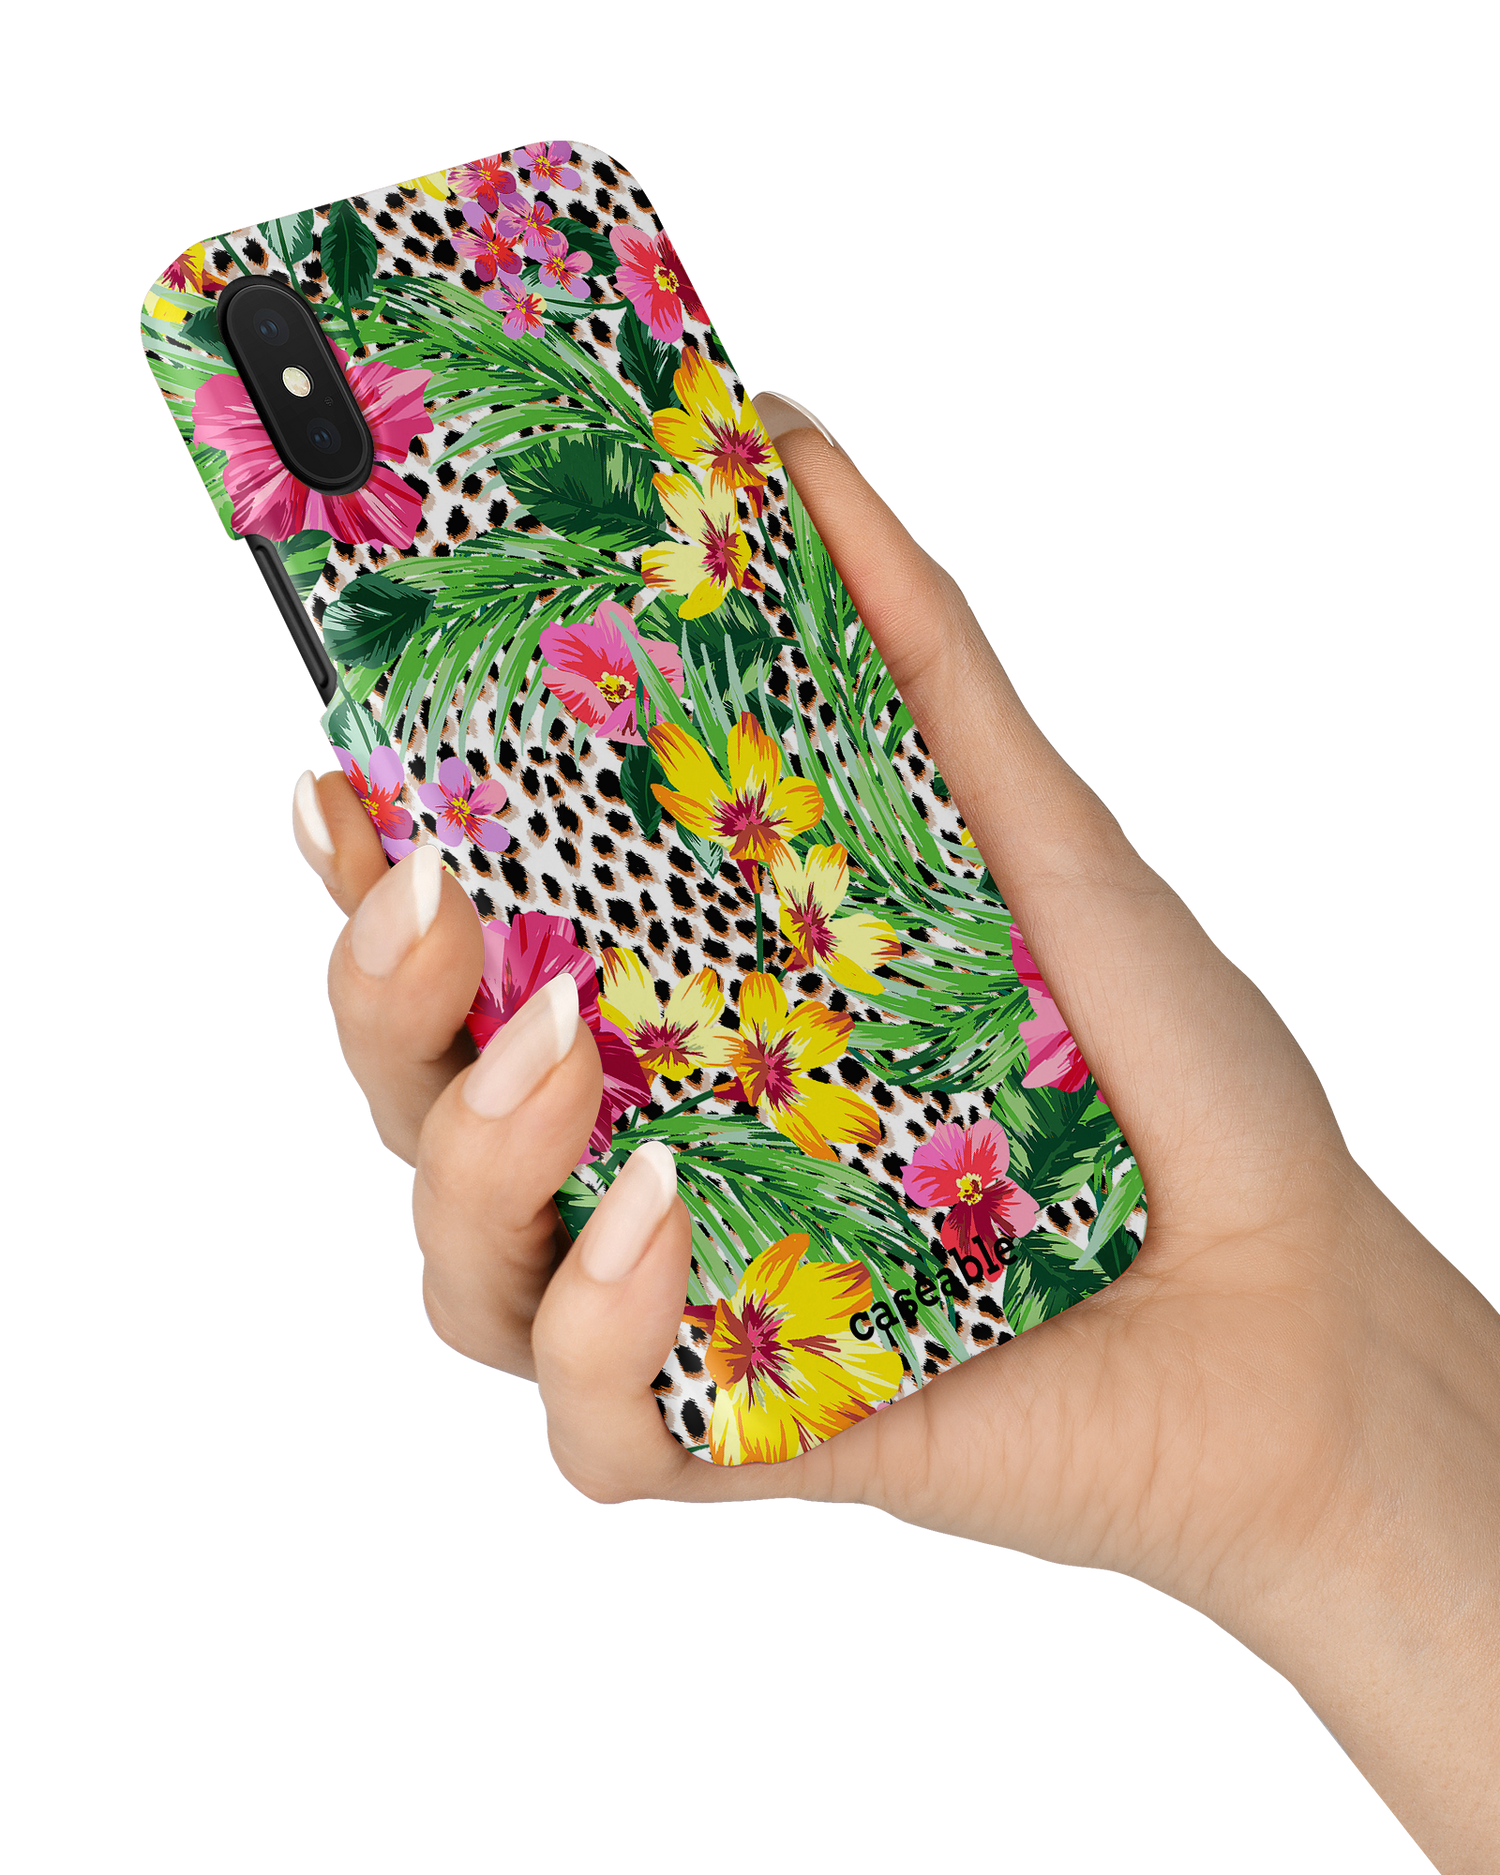 Tropical Cheetah Hard Shell Phone Case Apple iPhone X, Apple iPhone XS held in hand